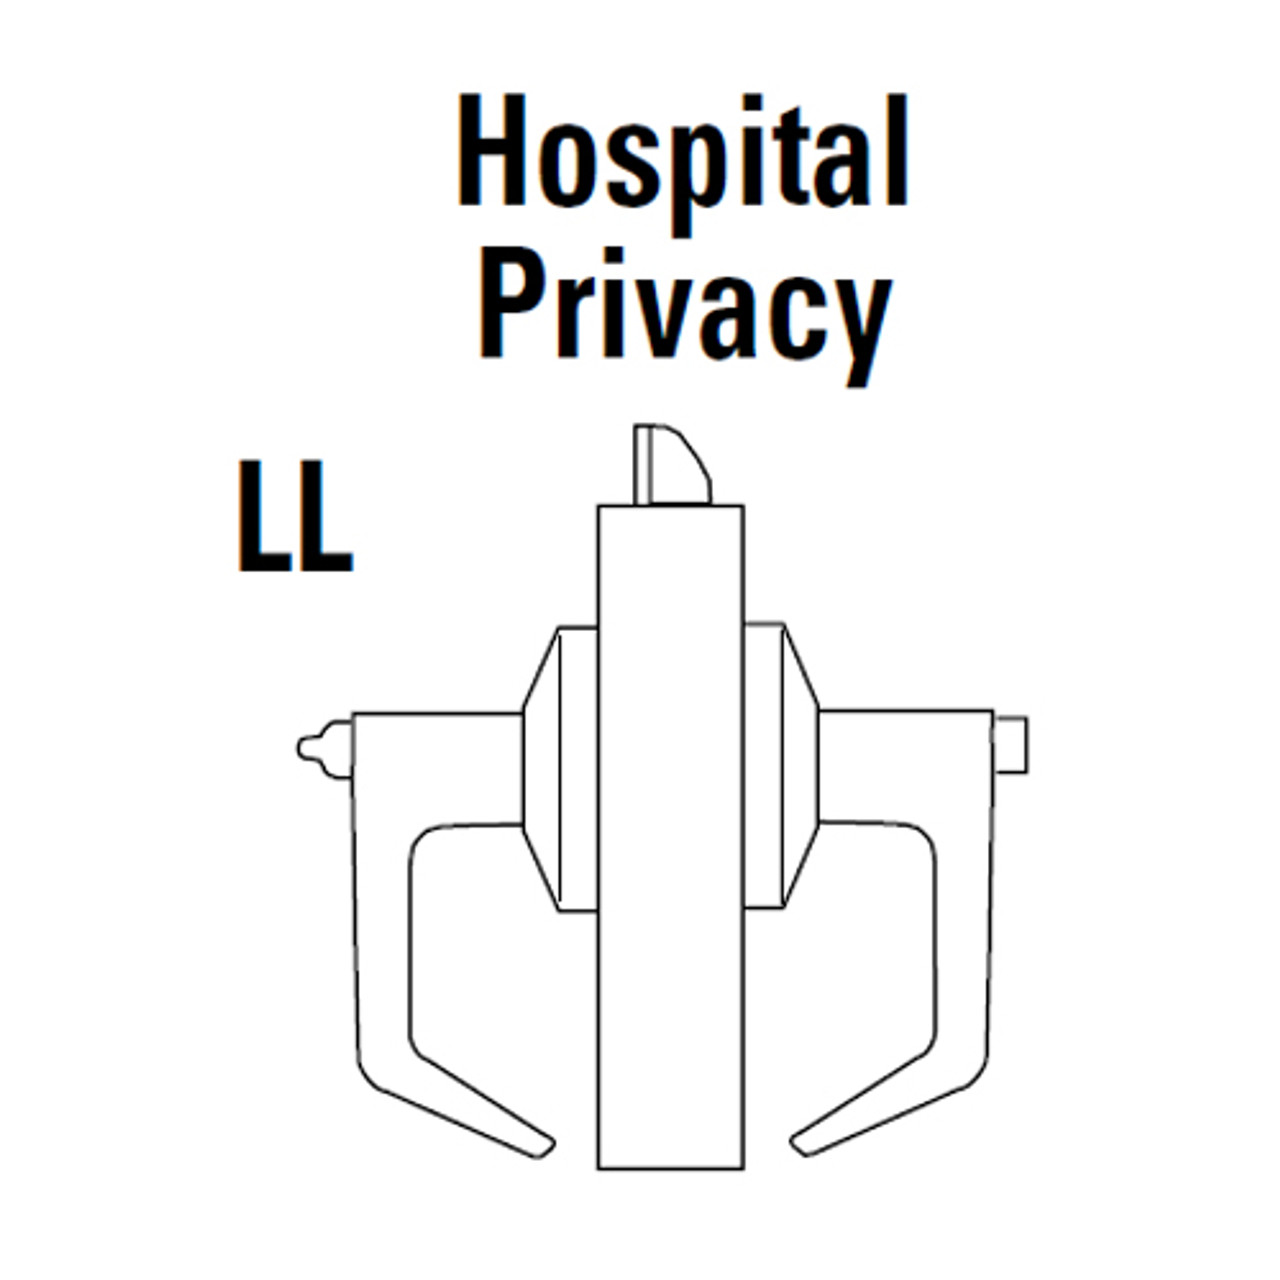 9K30LL14KS3622 Best 9K Series Hospital Privacy Heavy Duty Cylindrical Lever Locks in Black